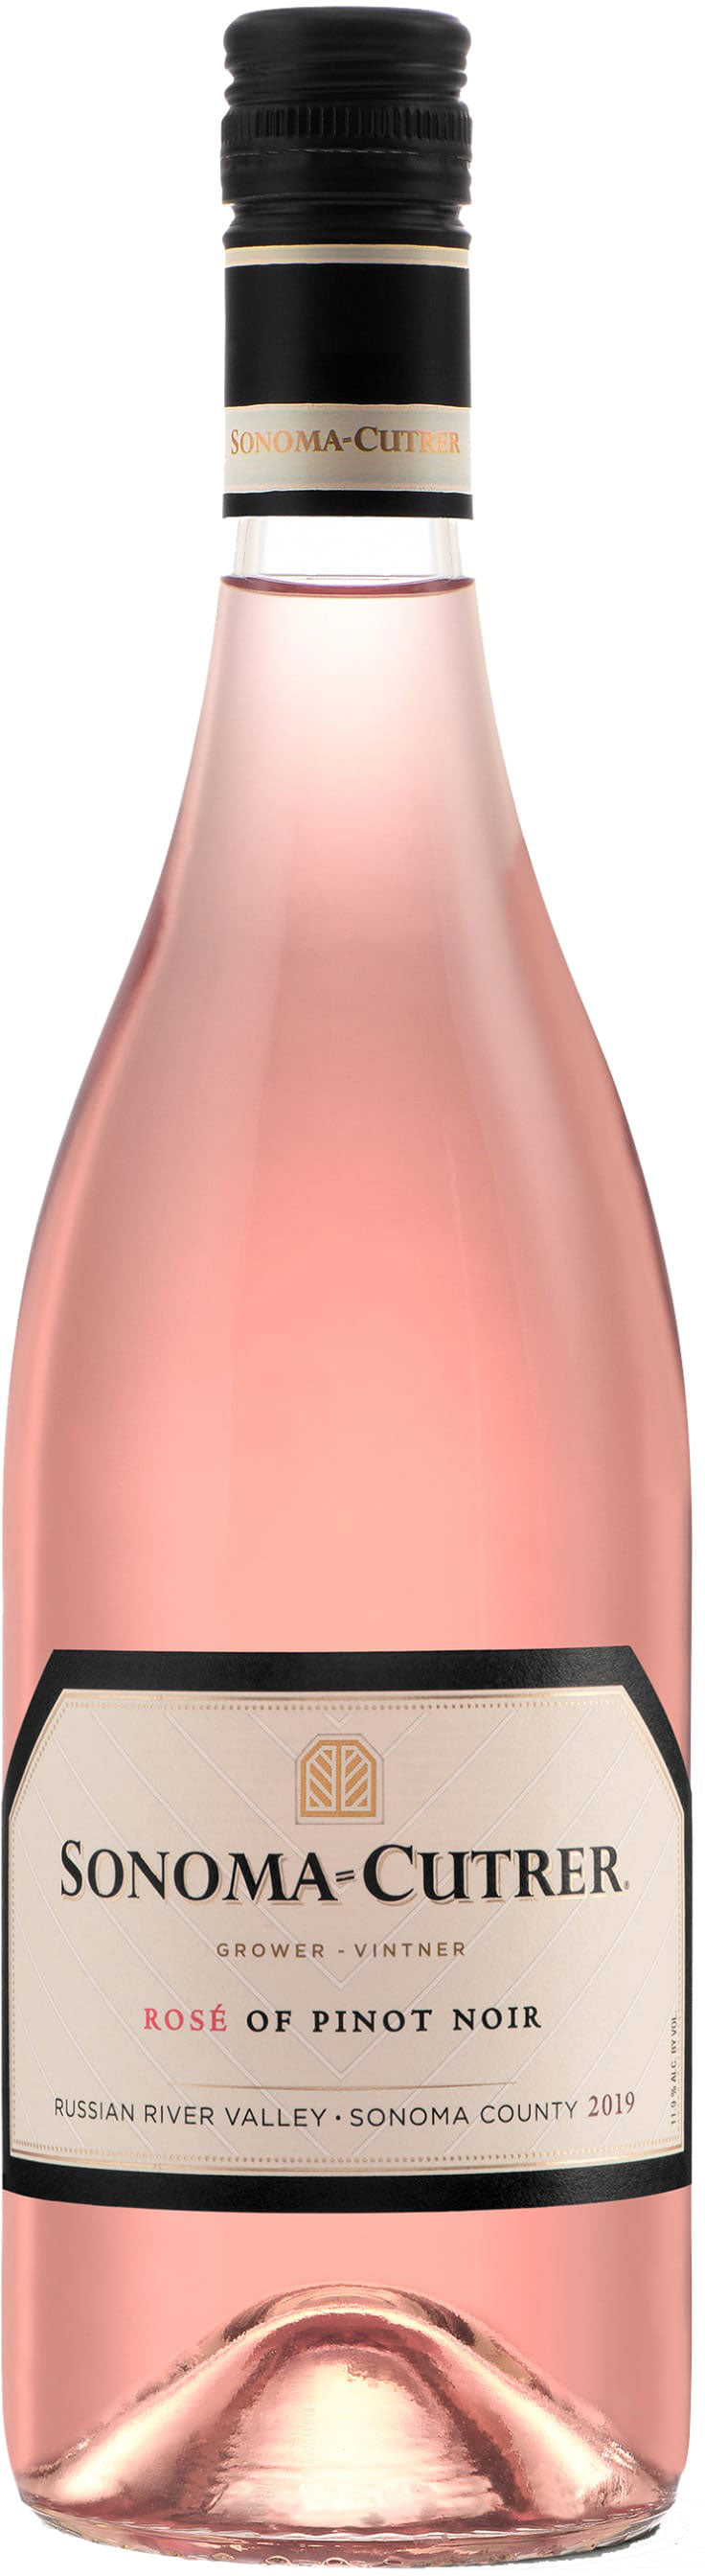 Sonoma-Cutrer Rose Of Pinot Noir Winemaker's Release 2019